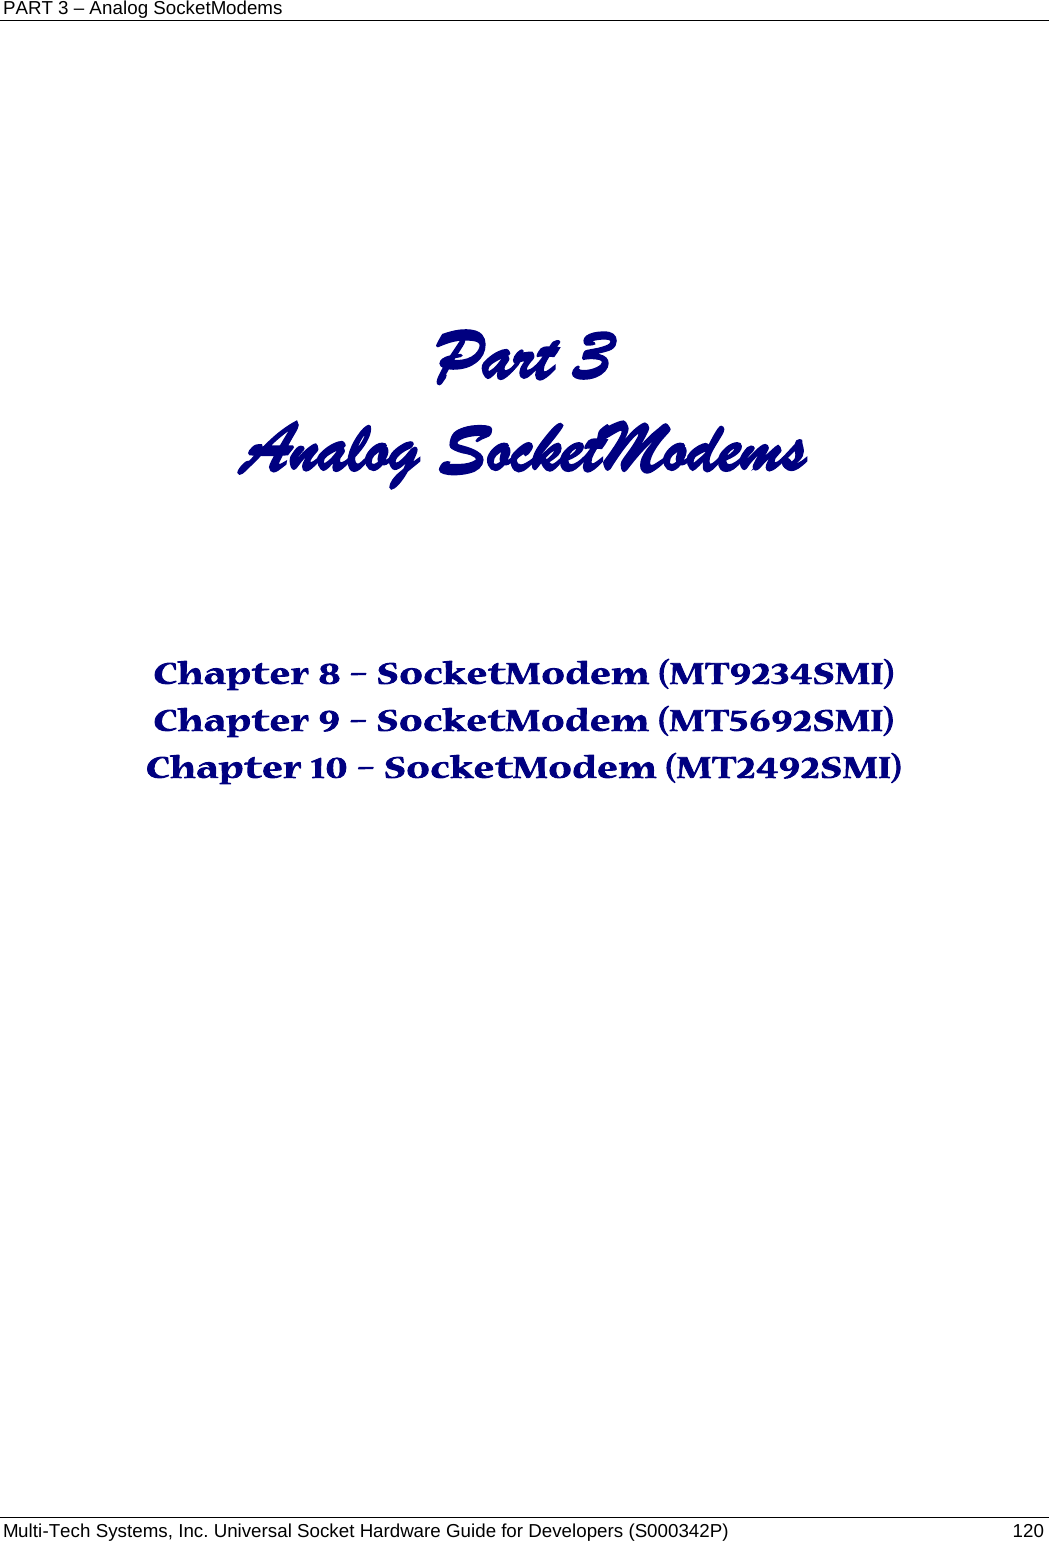 PART 3 – Analog SocketModems Multi-Tech Systems, Inc. Universal Socket Hardware Guide for Developers (S000342P)  120     Part 3 Analog SocketModems   Chapter 8 – SocketModem (MT9234SMI) Chapter 9 – SocketModem (MT5692SMI) Chapter 10 – SocketModem (MT2492SMI)    